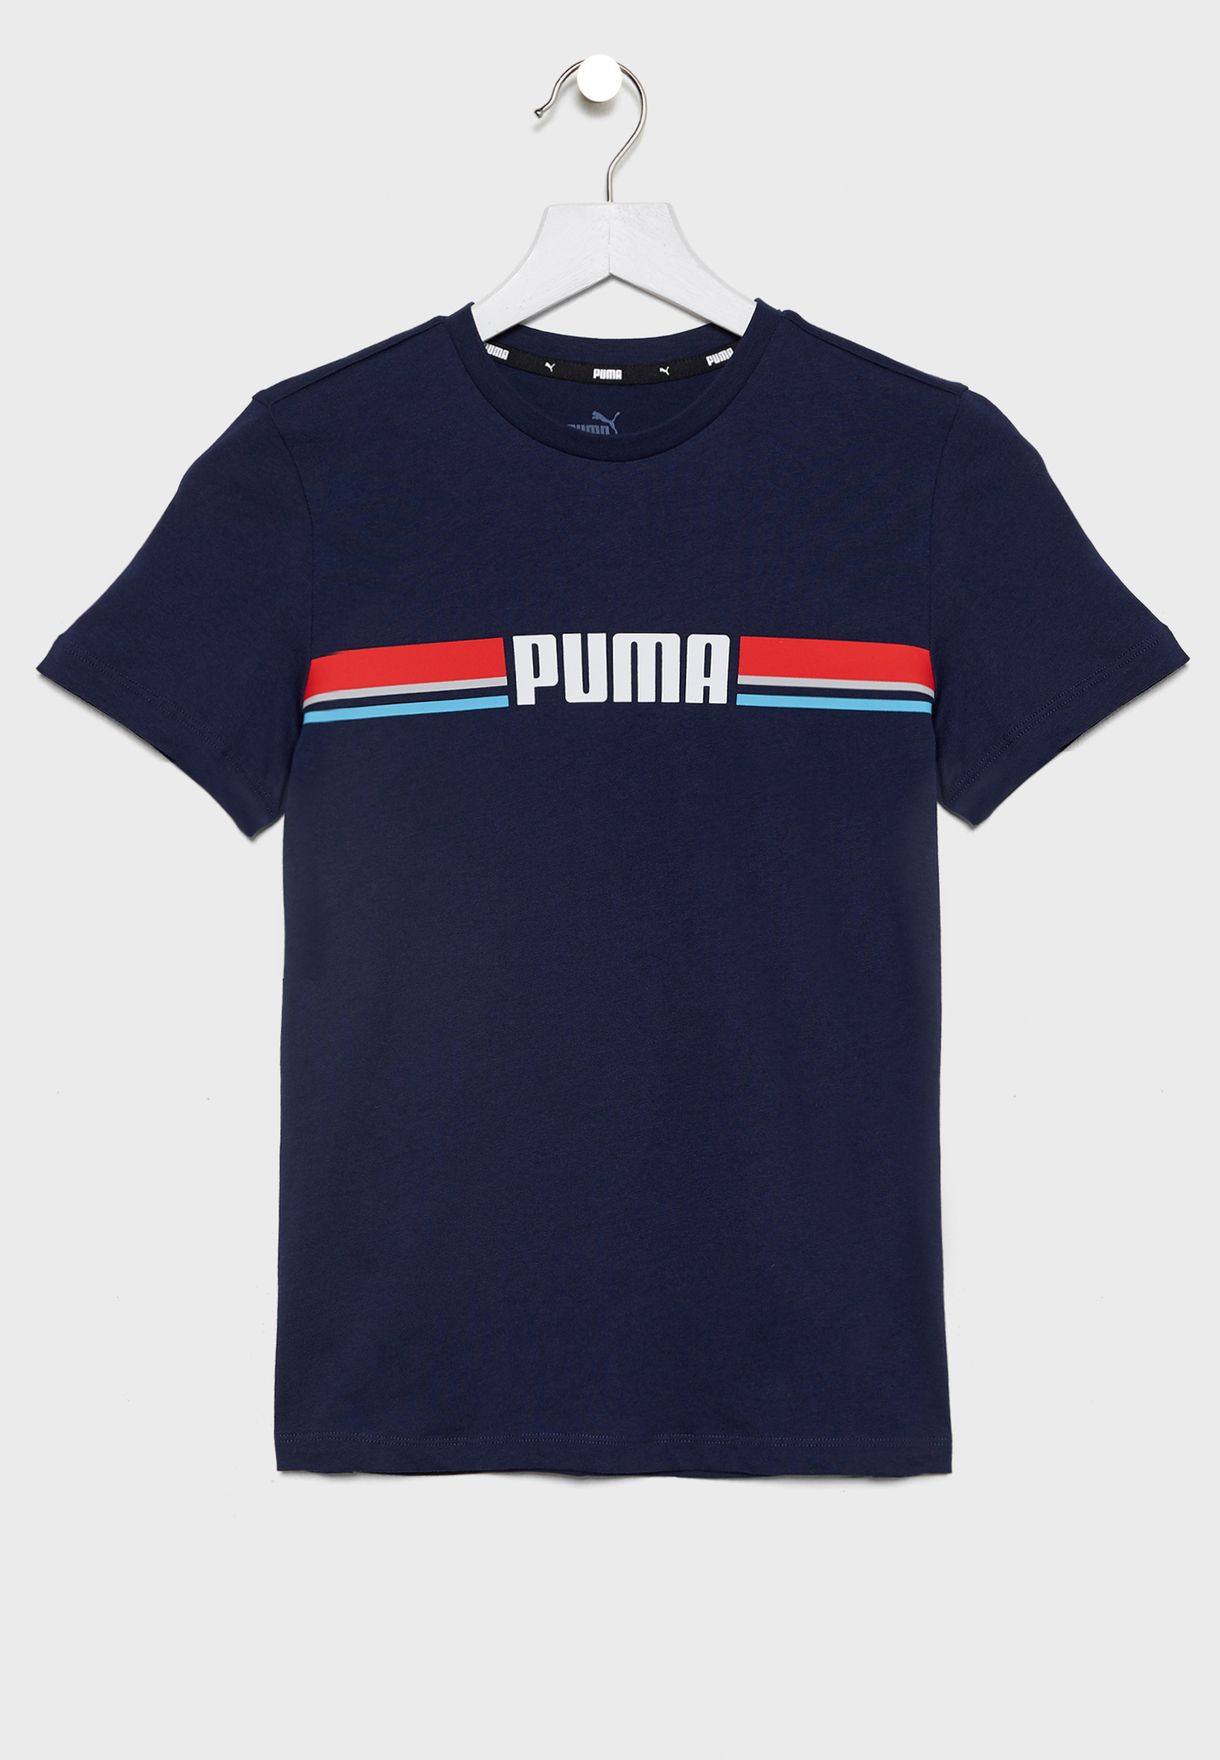 puma baby clothes online